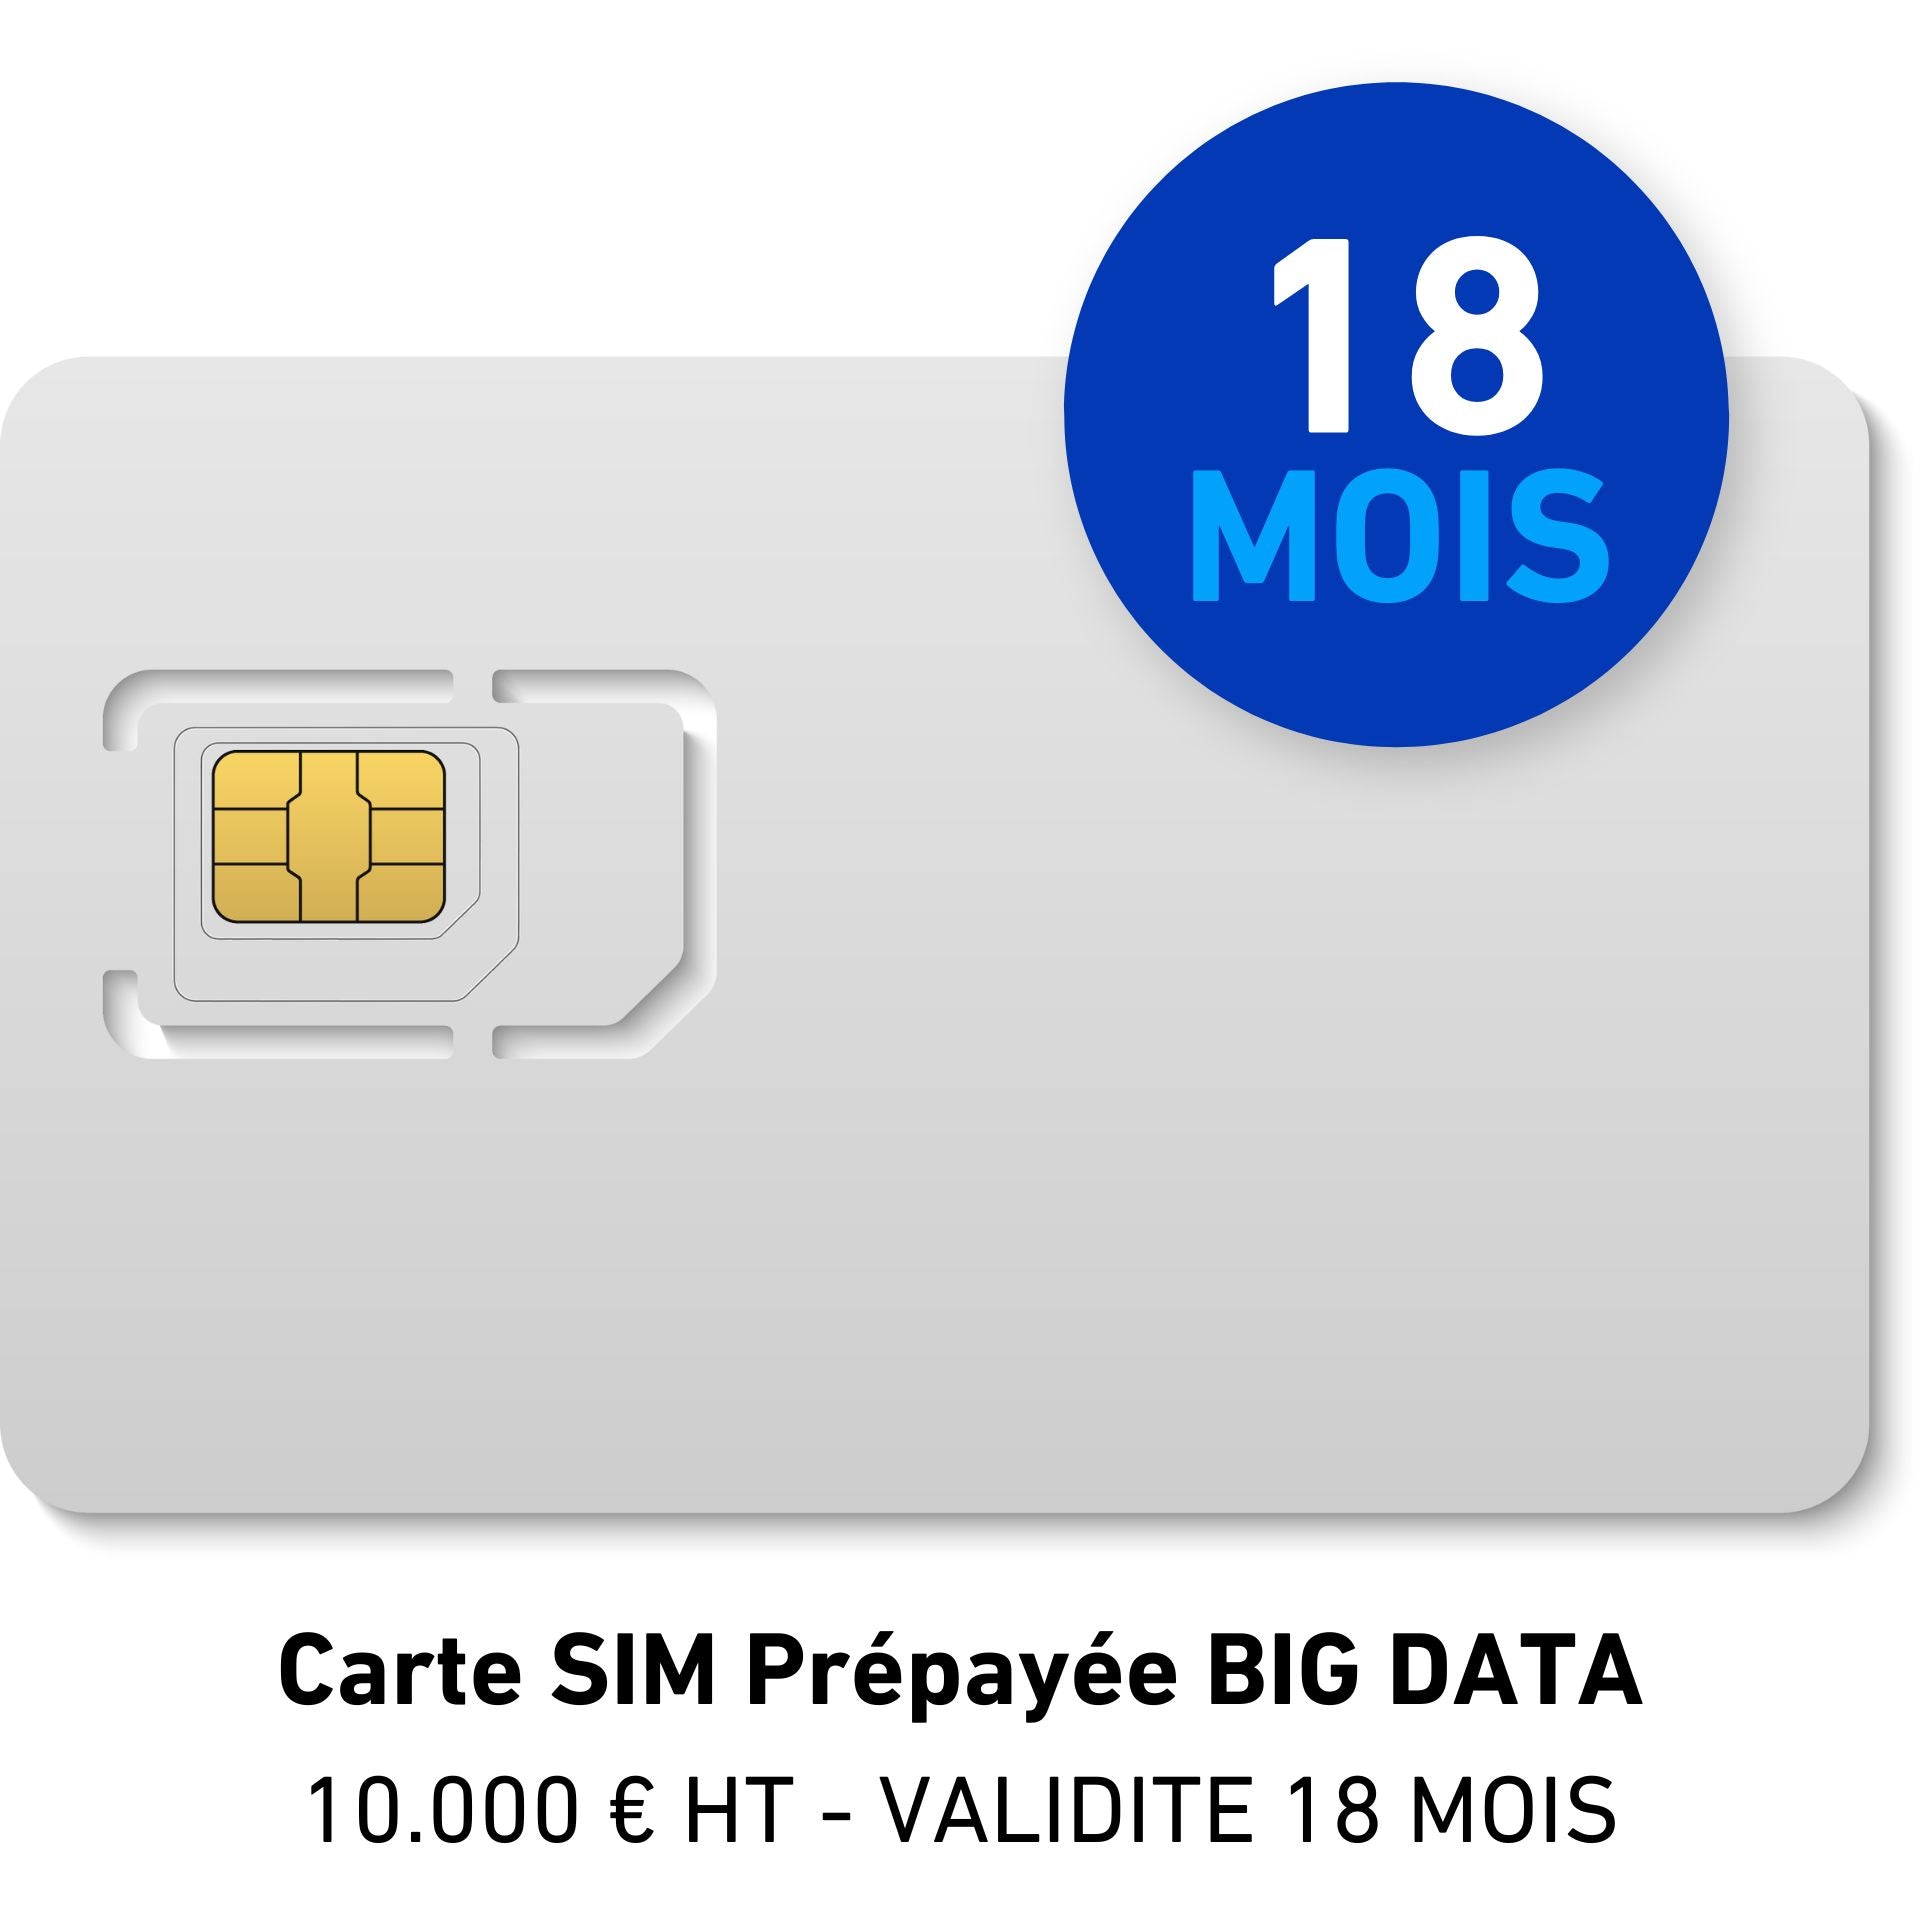 BIG DATA prepaid SIM card 10.000 € HT - VALIDITY 18 MONTHS